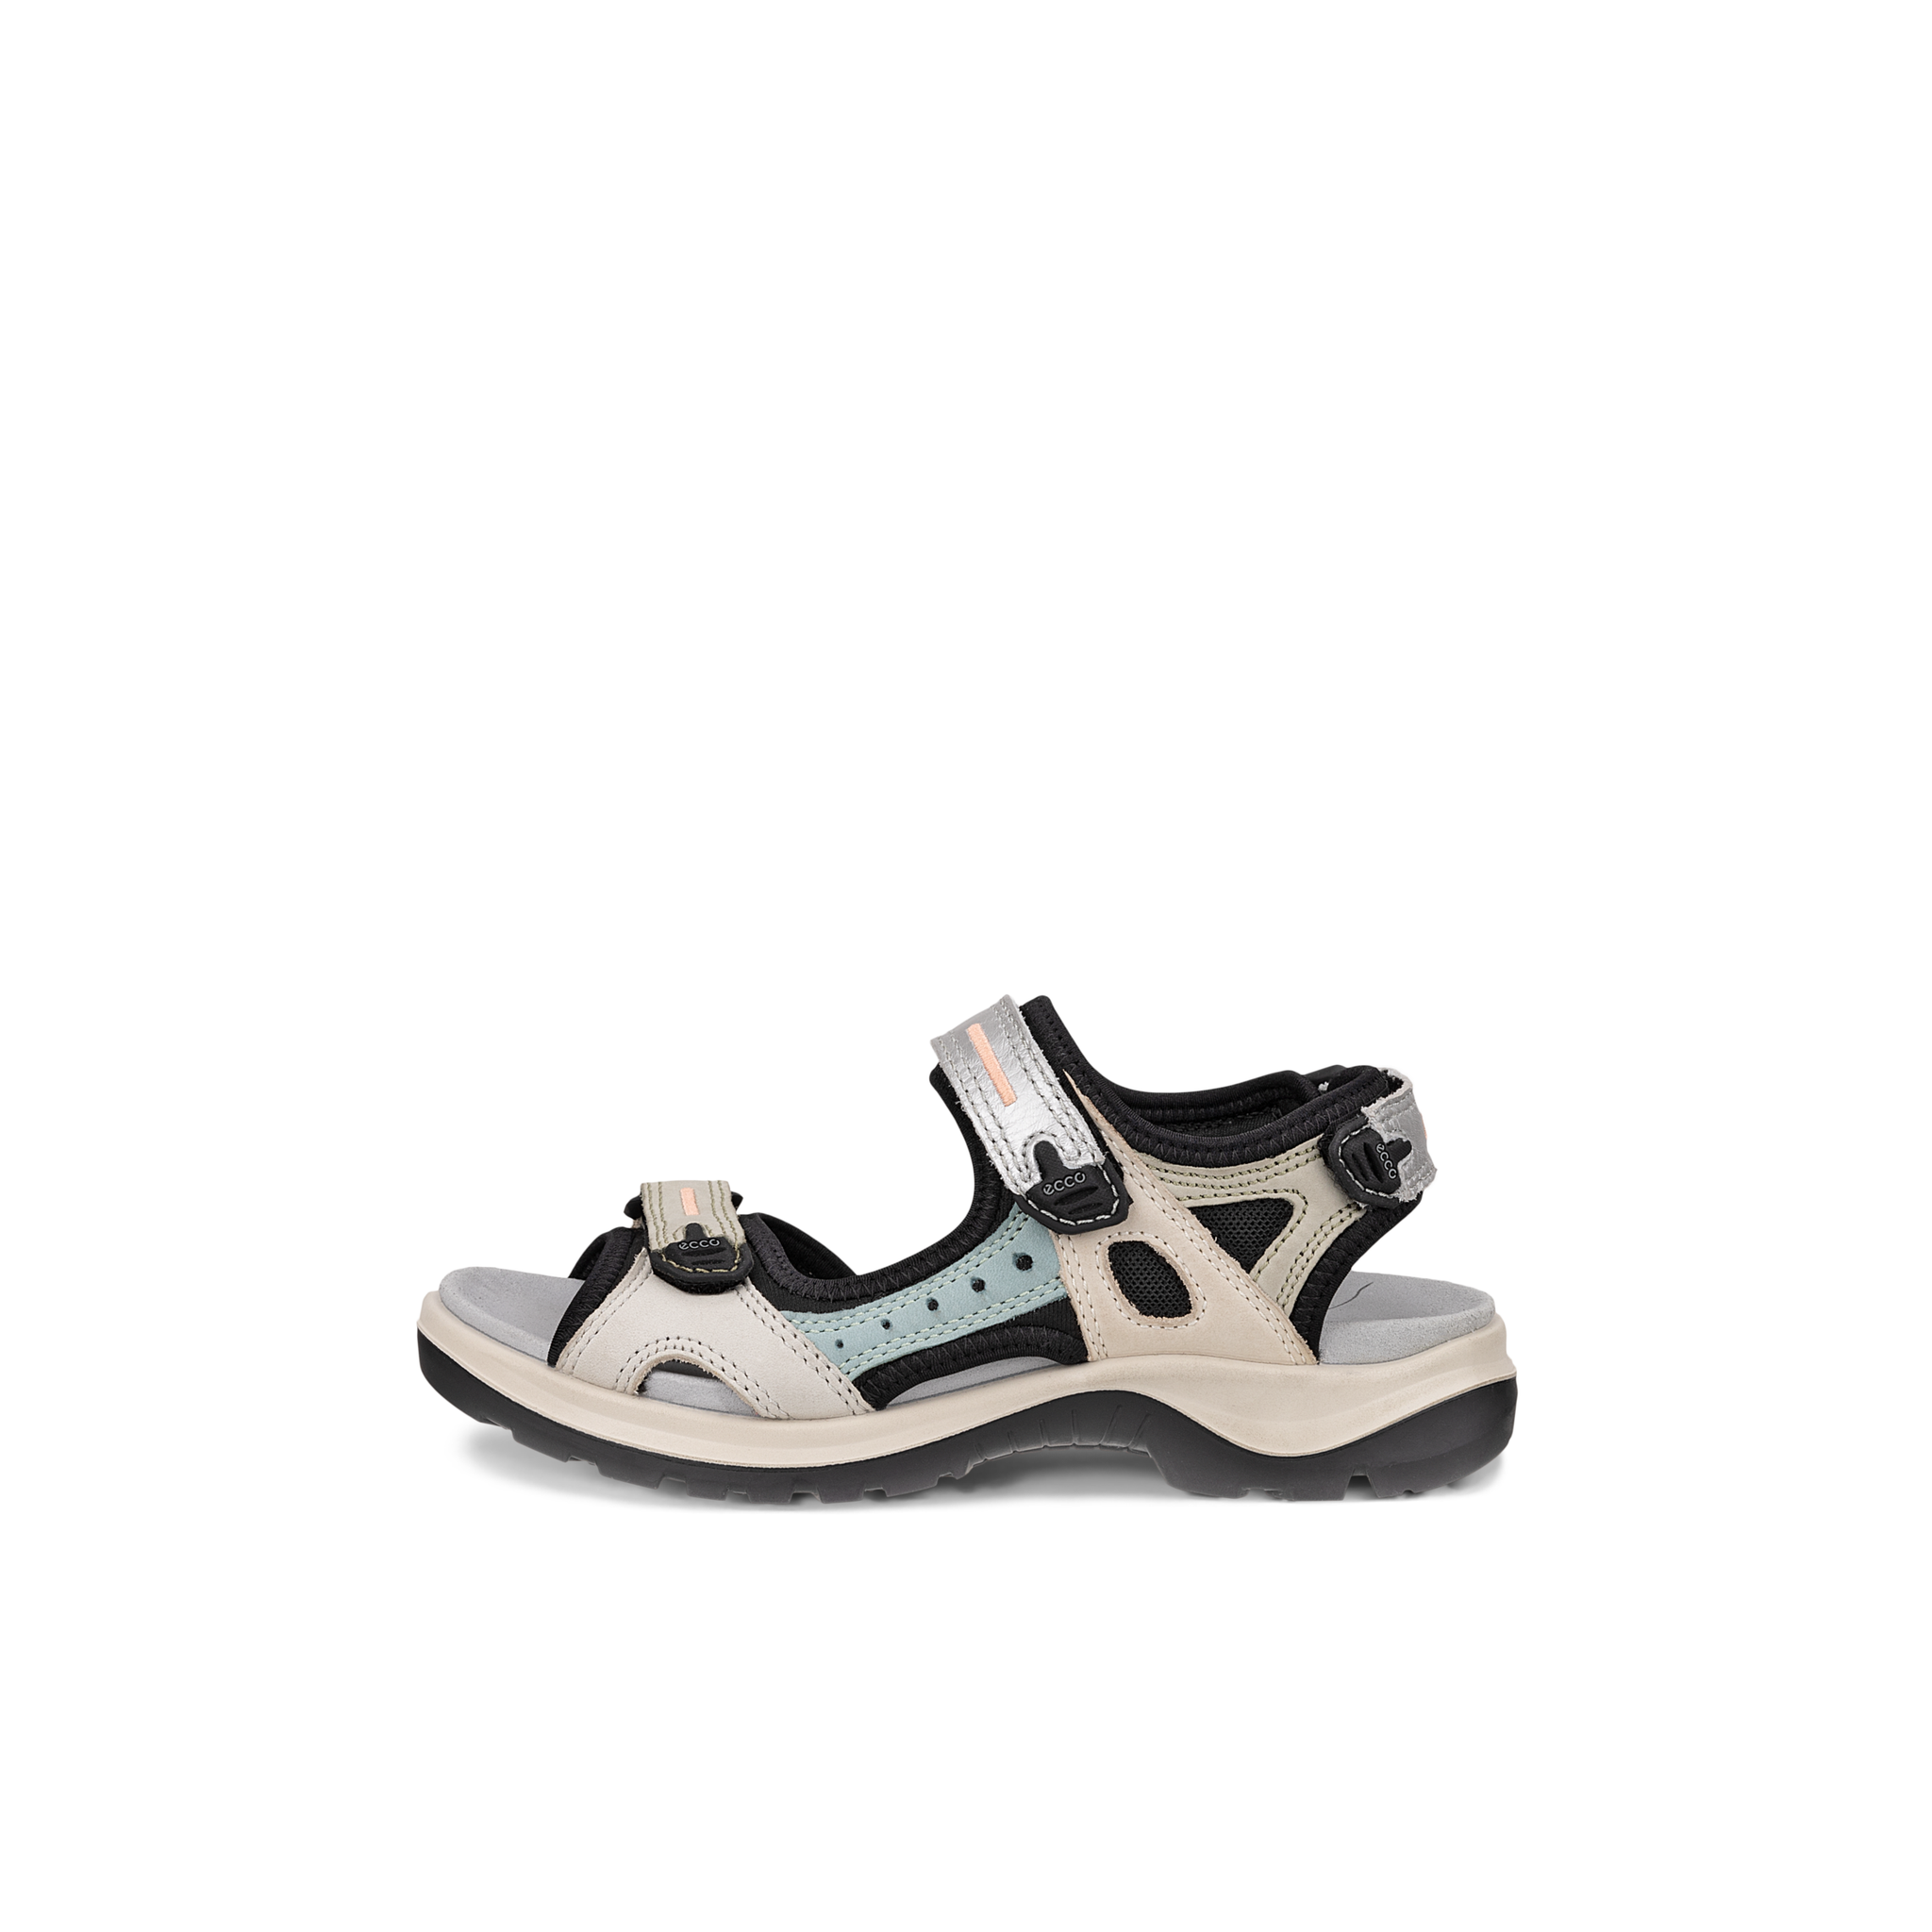 ECCO Offroad (822083)- Ladies Walking Sandal in Beige Multi | ECCO Shoes | Wisemans | Bantry | West Cork | Shoe Shop | Ireland